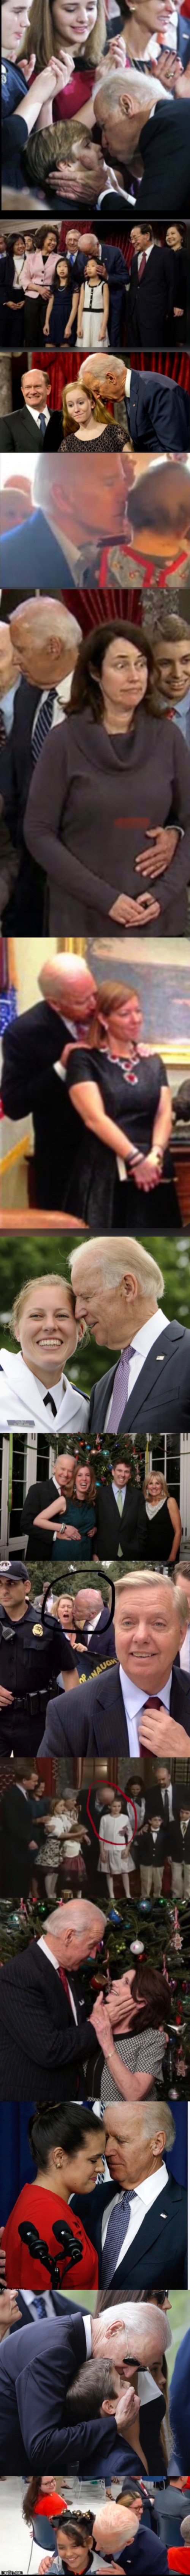 Creepy Joe’s fold-out wallet pics | image tagged in joe biden,dnc,democrats | made w/ Imgflip meme maker